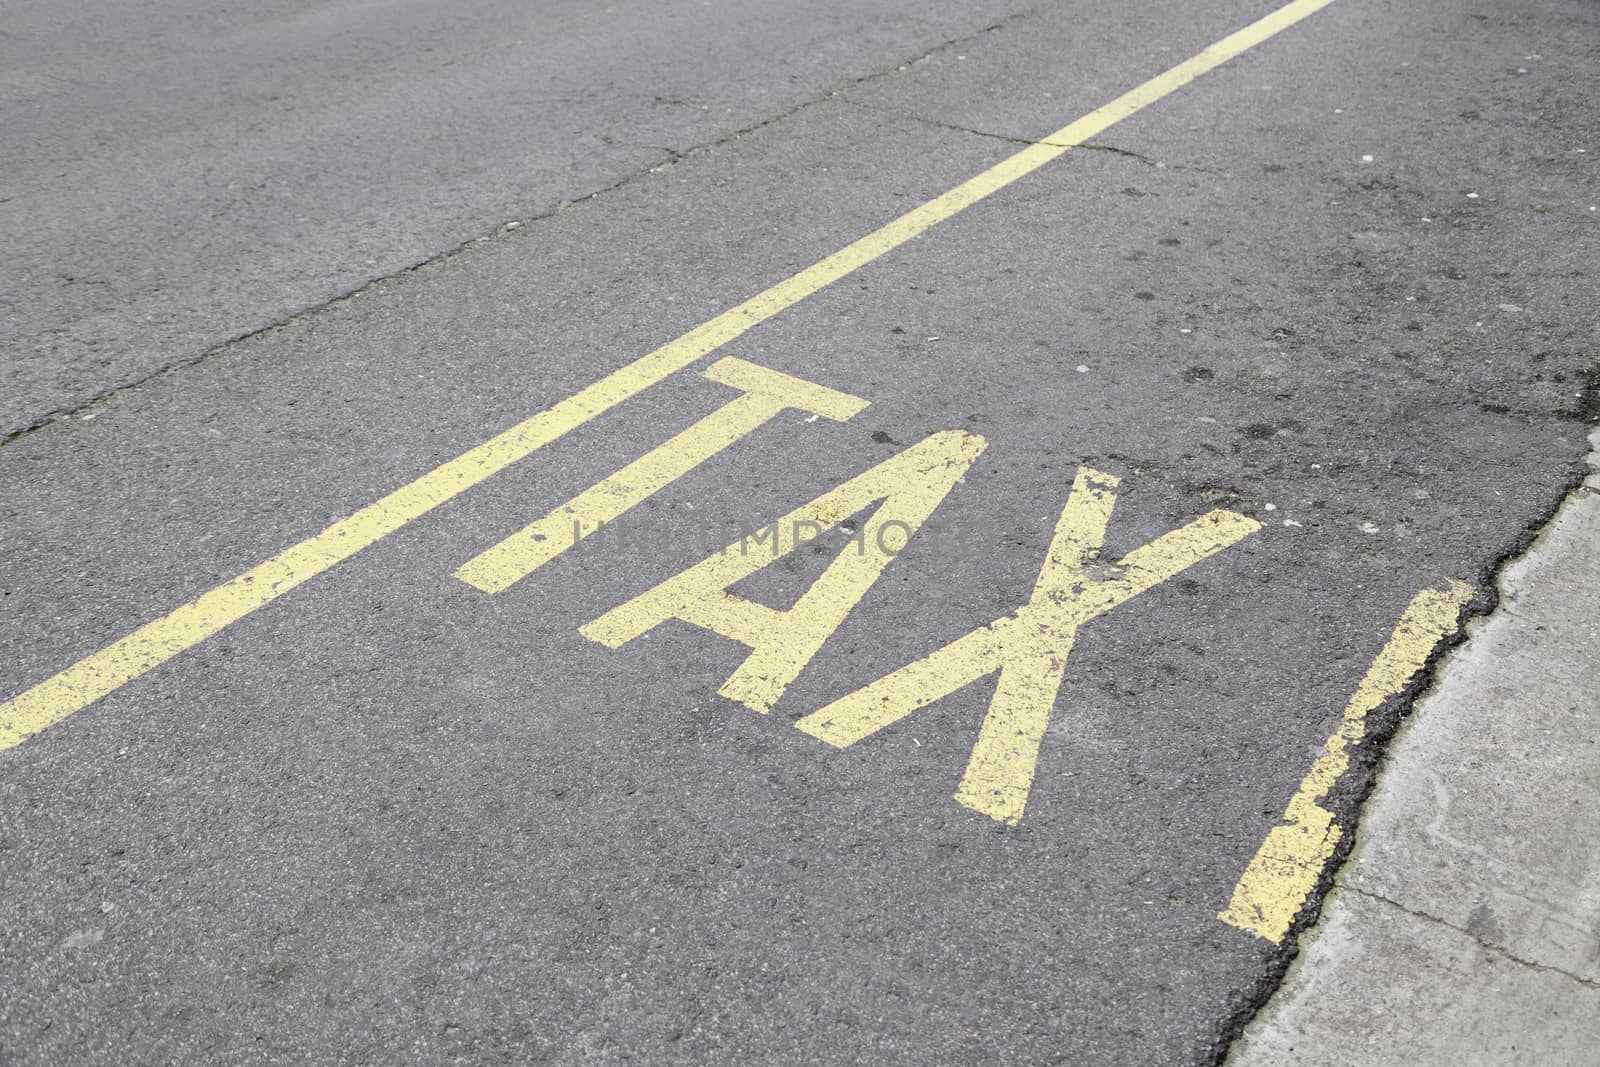 Taxi sign painted on asphalt by esebene